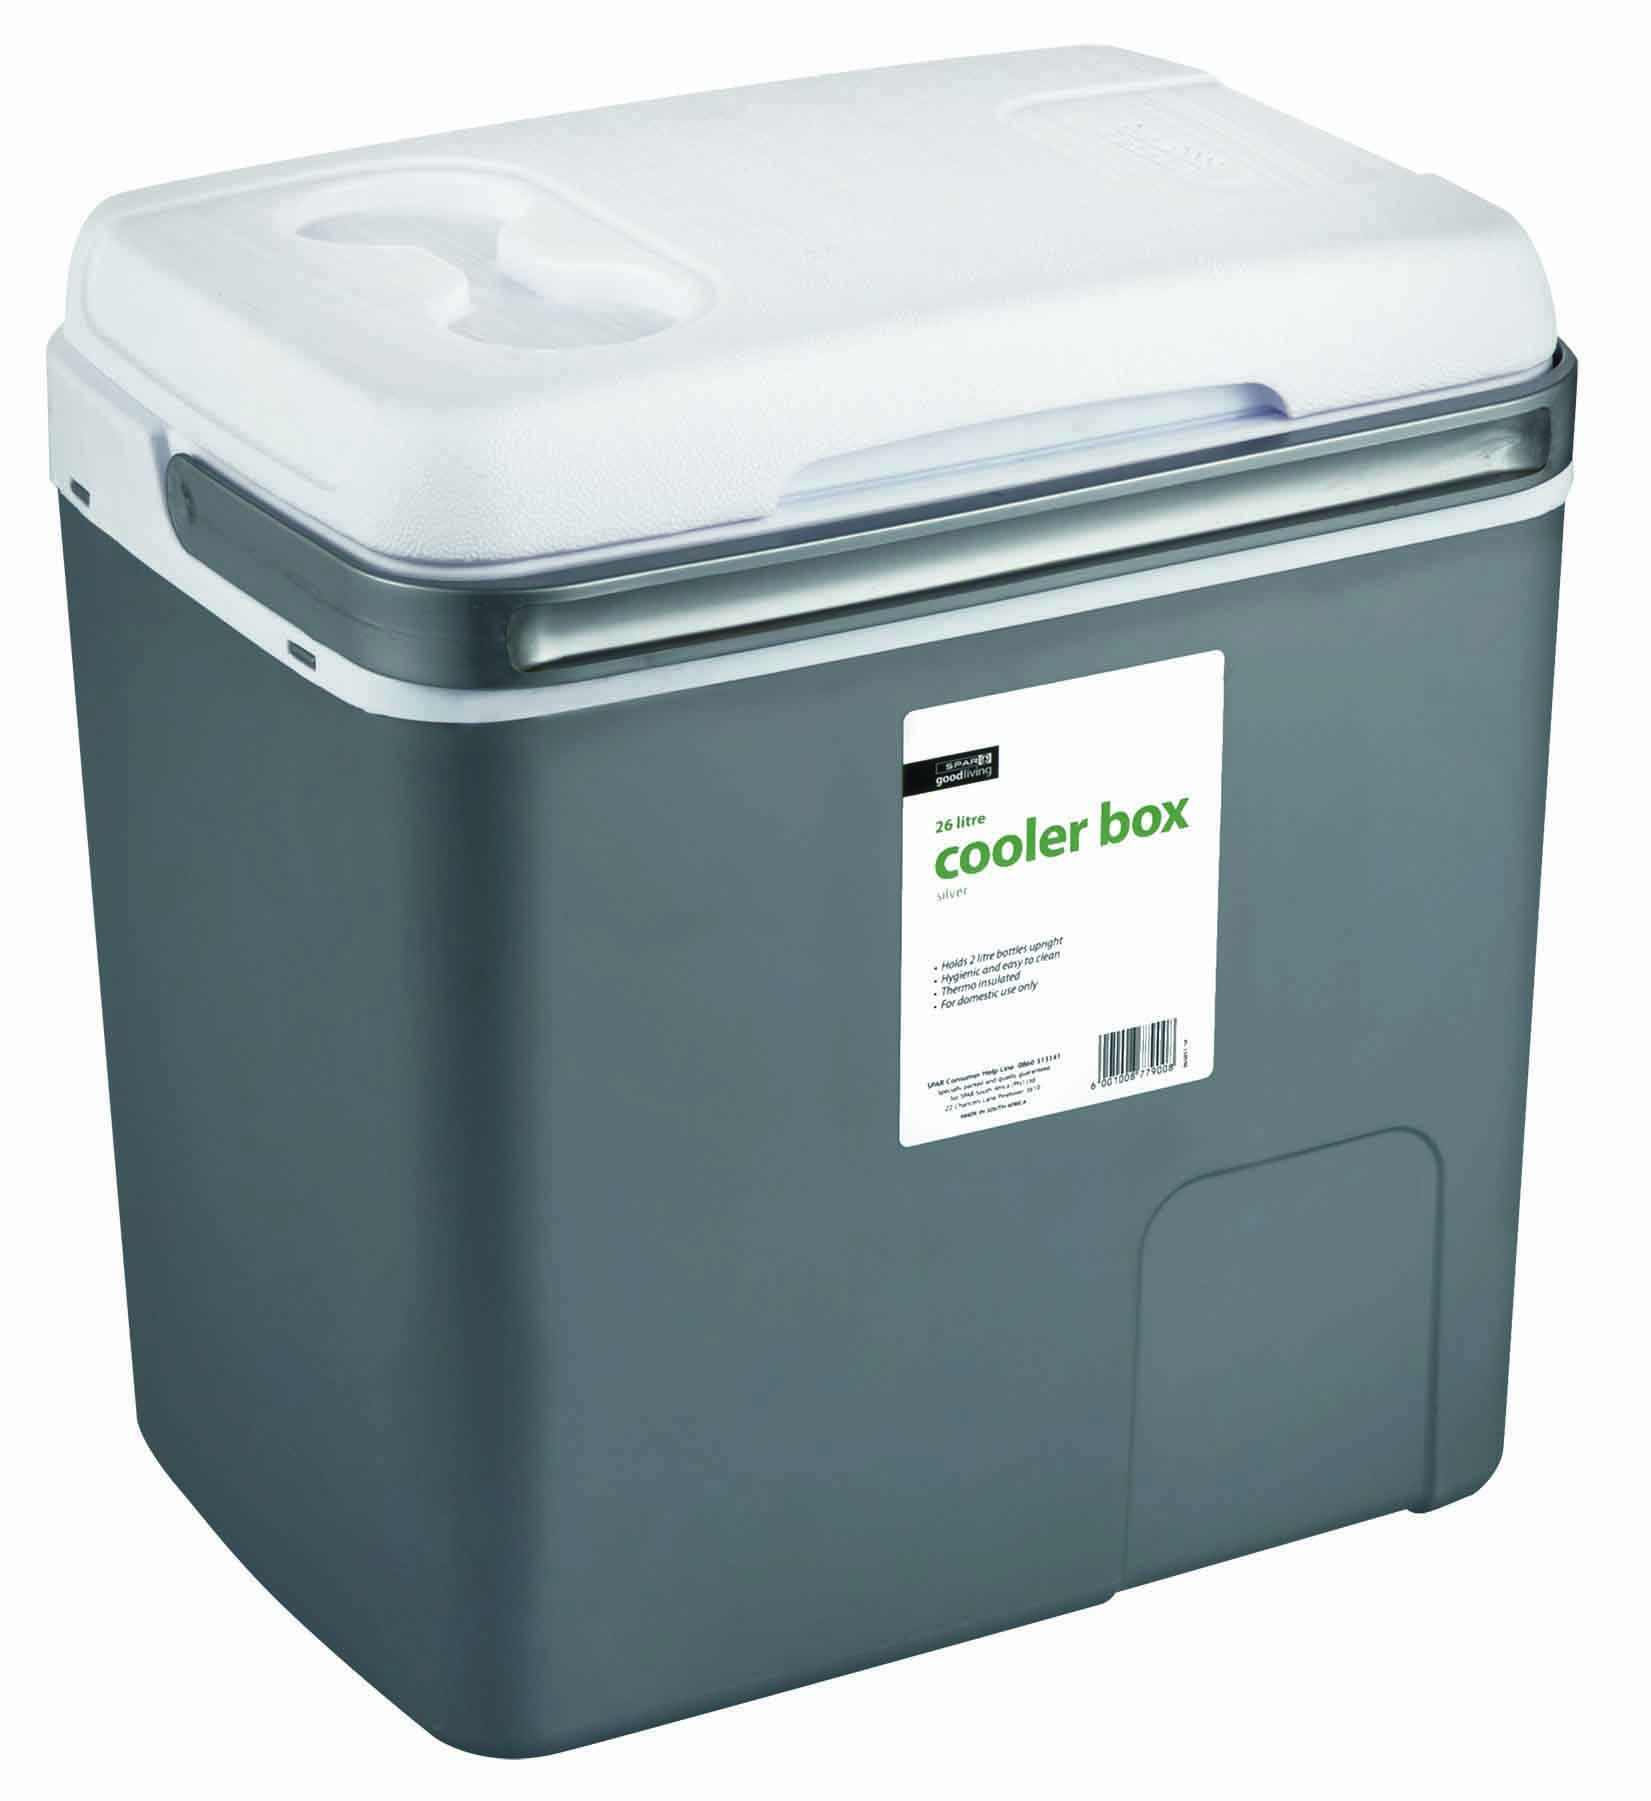 cooler box 26 litre (silver)